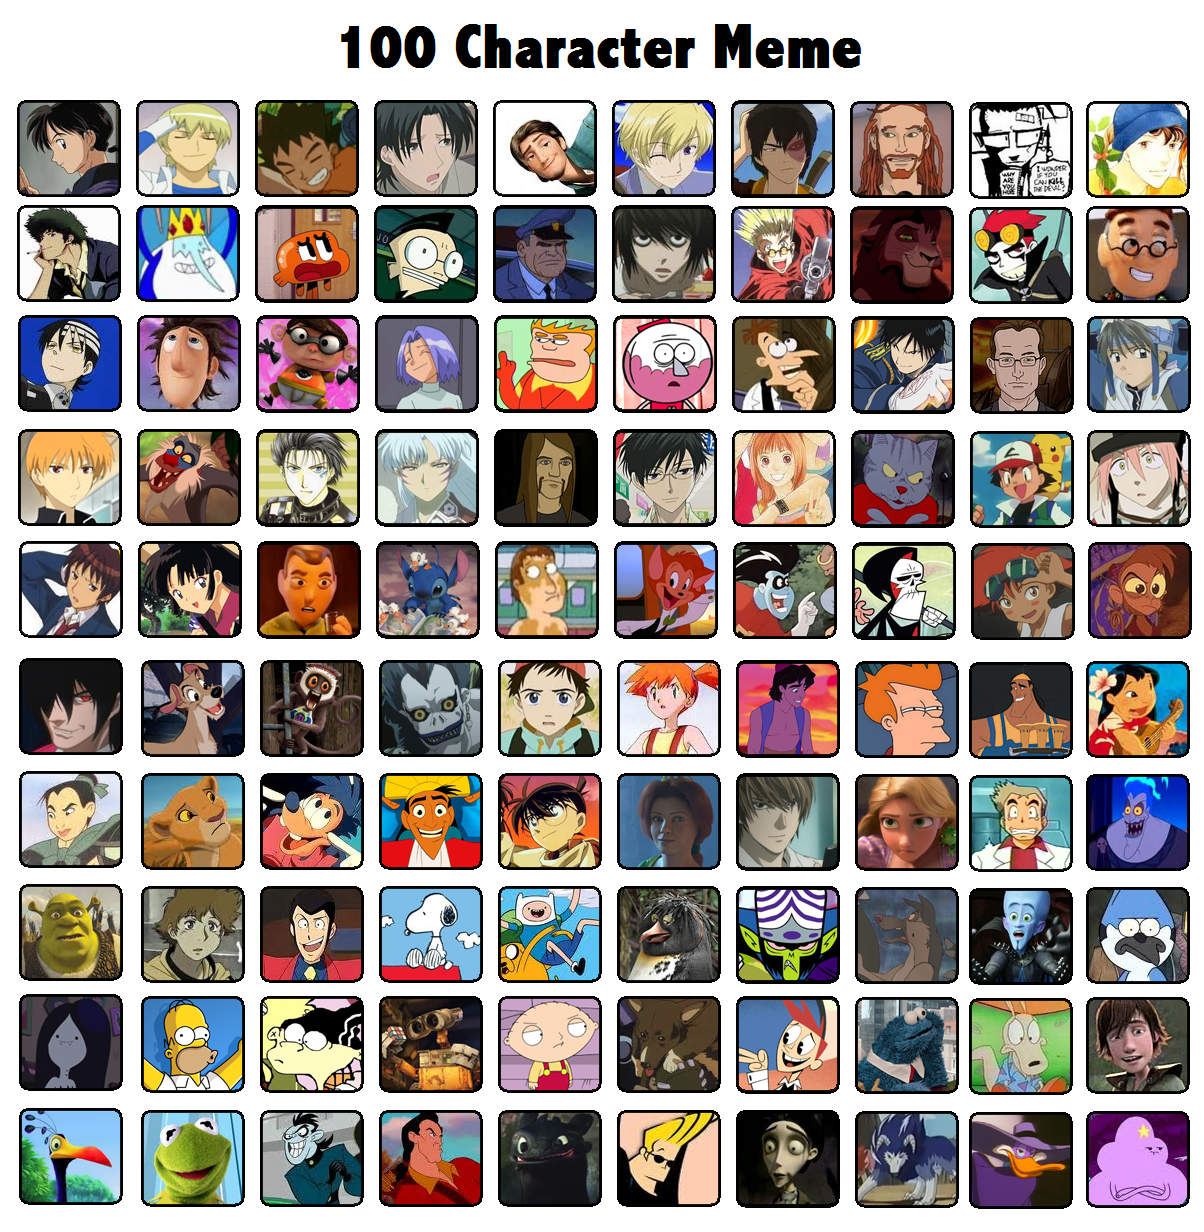 100 Character Meme by Miiroku on DeviantArt